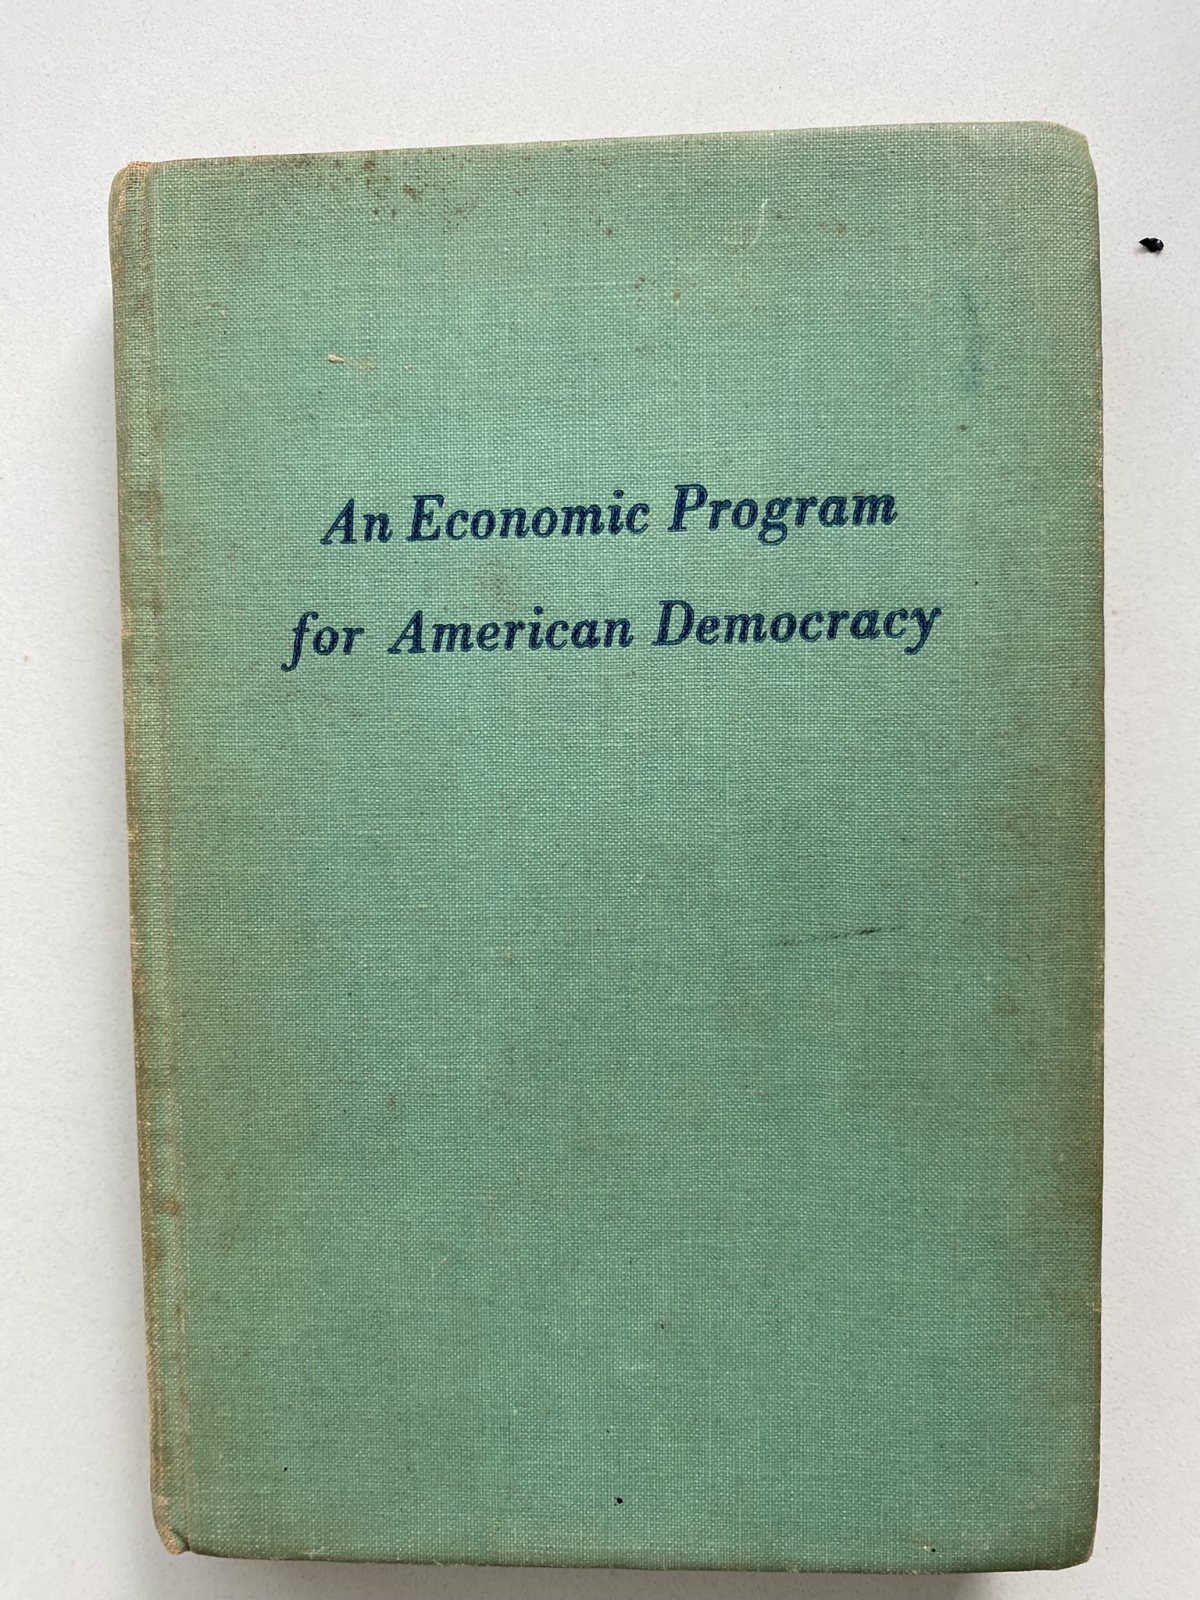 Introducing *An Economic Program for American Democracy*